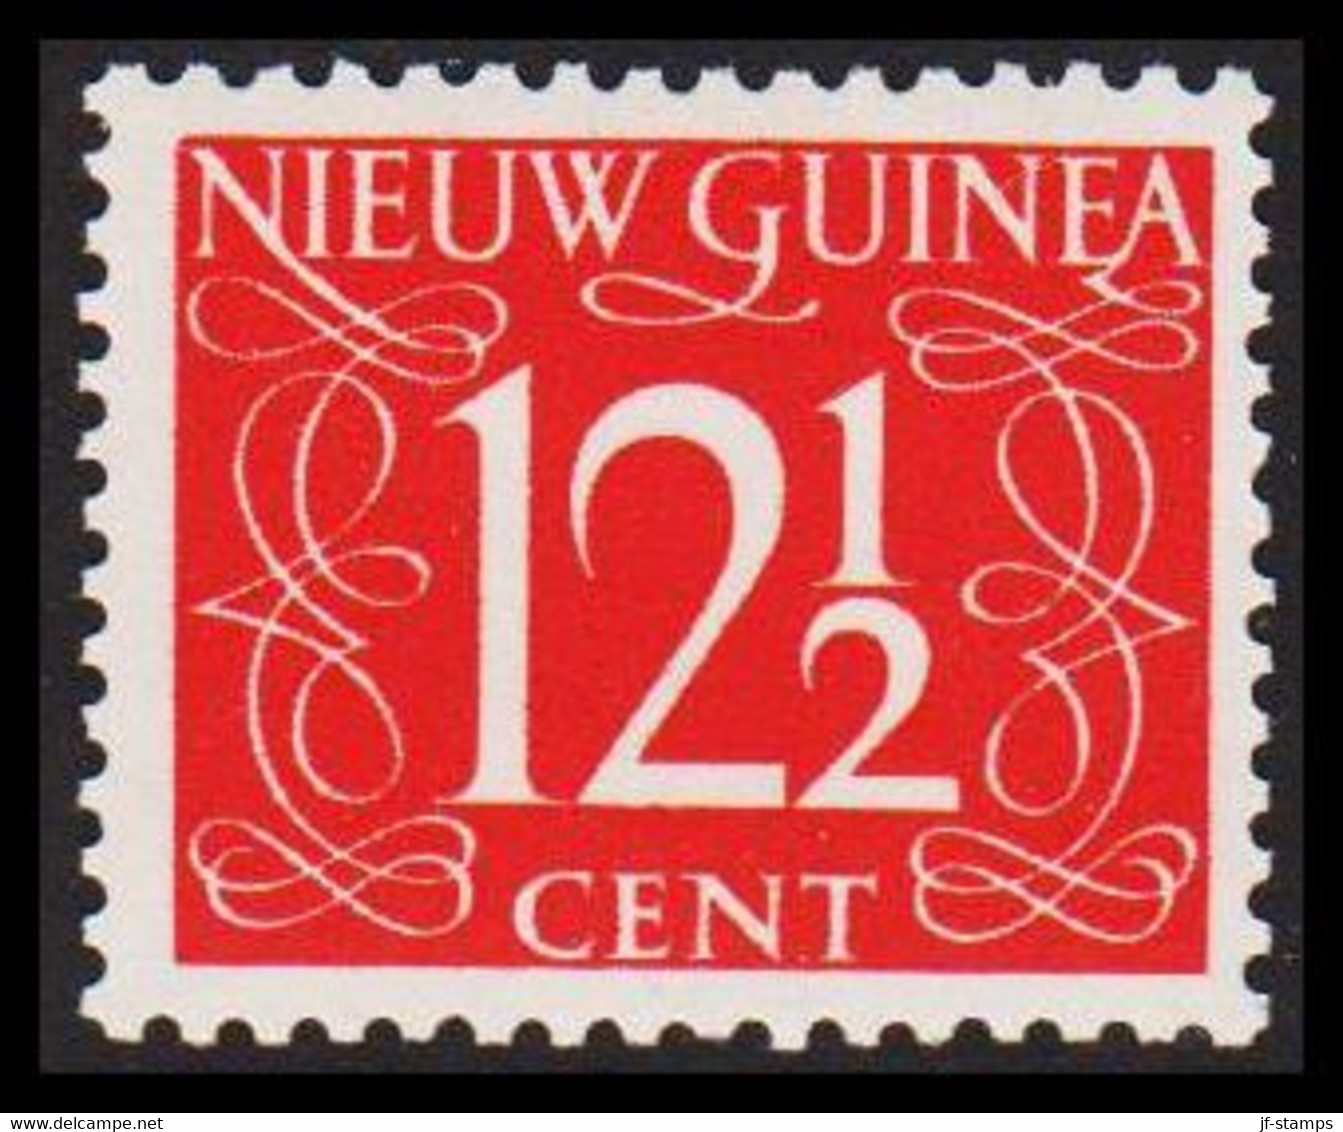 1950. NIEUW GUINEA. Nummerals- Type 12½ CENT Hinged.  - JF529322 - Nuova Guinea Olandese